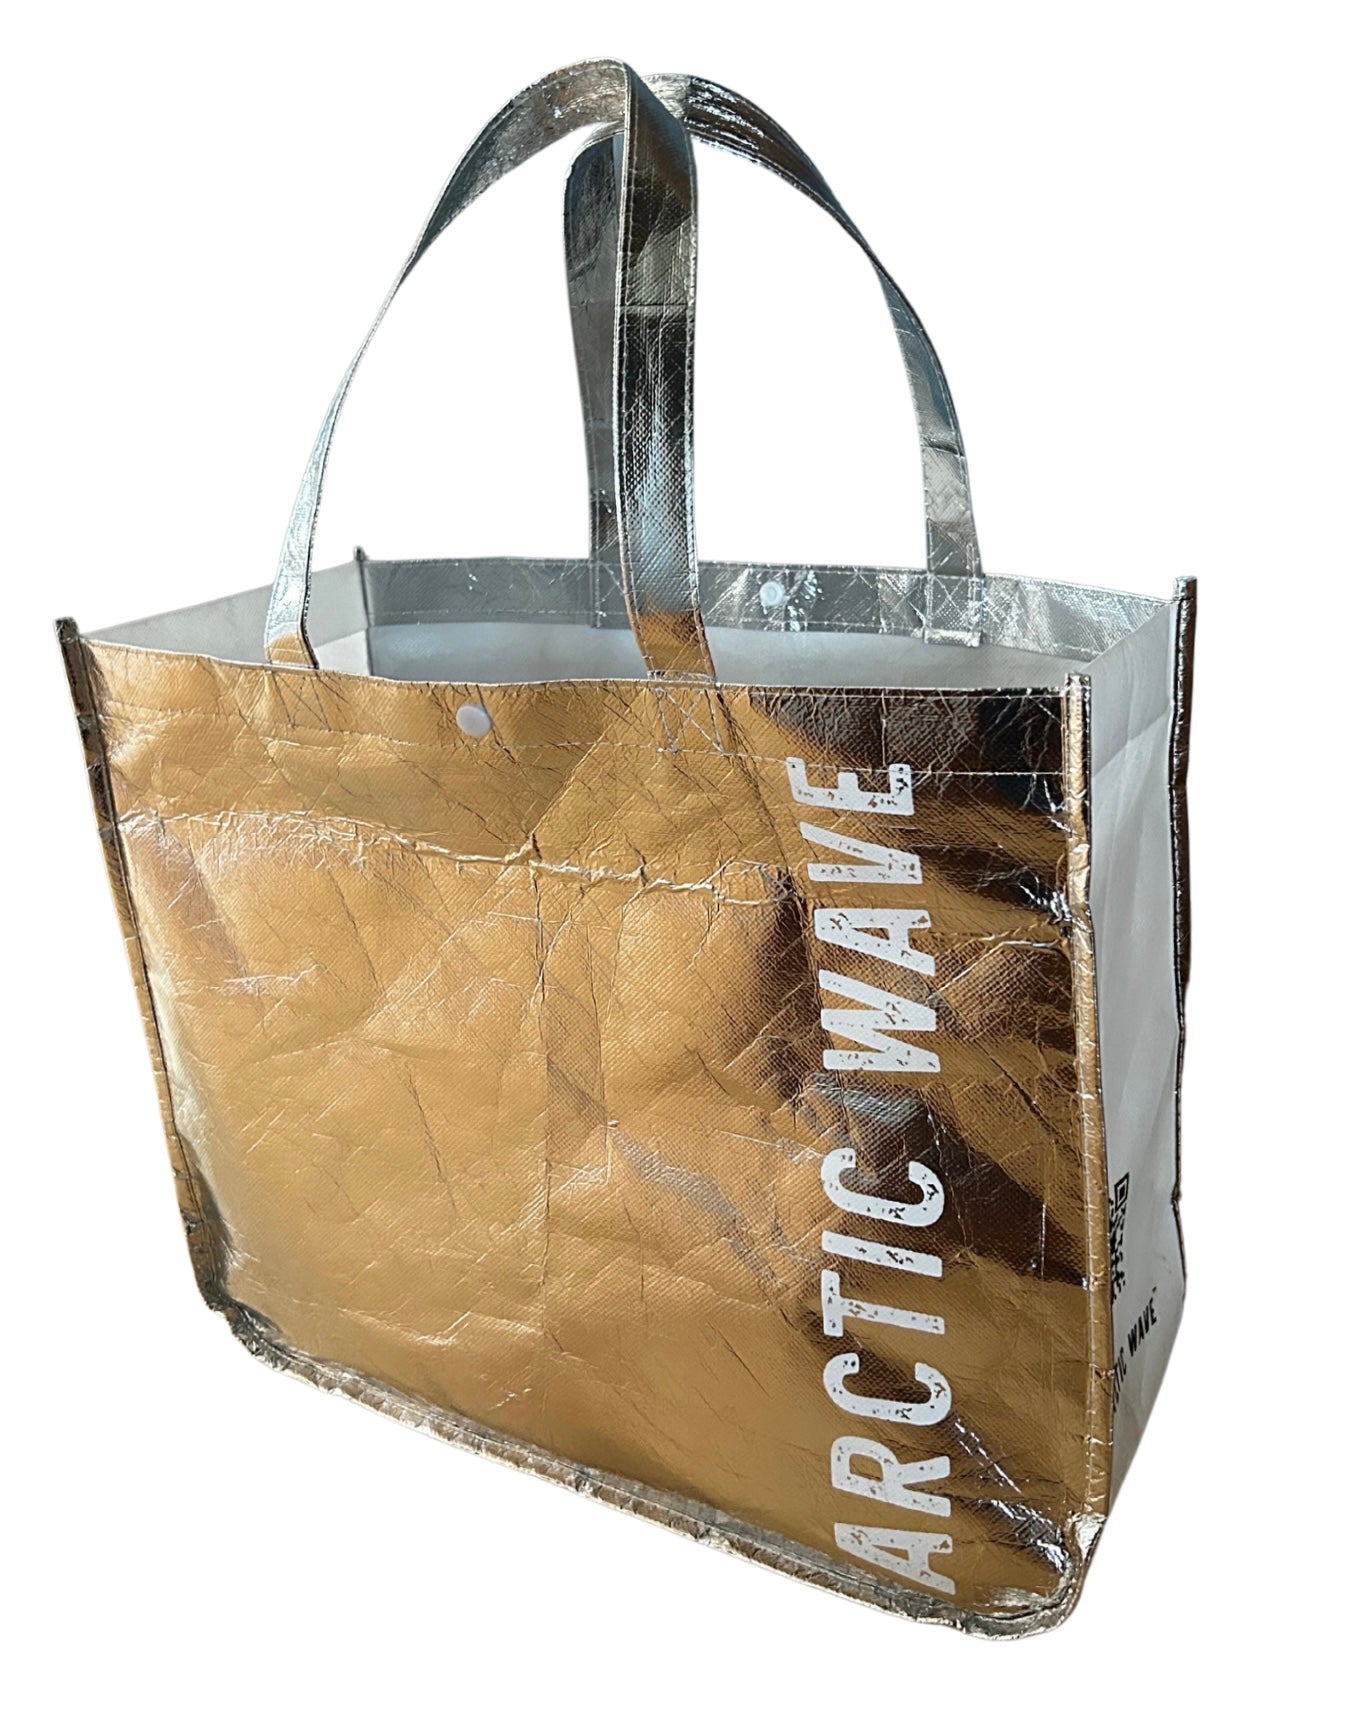 Reusable Lululemon Shopping Bag - Eco-Friendly and Stylish!